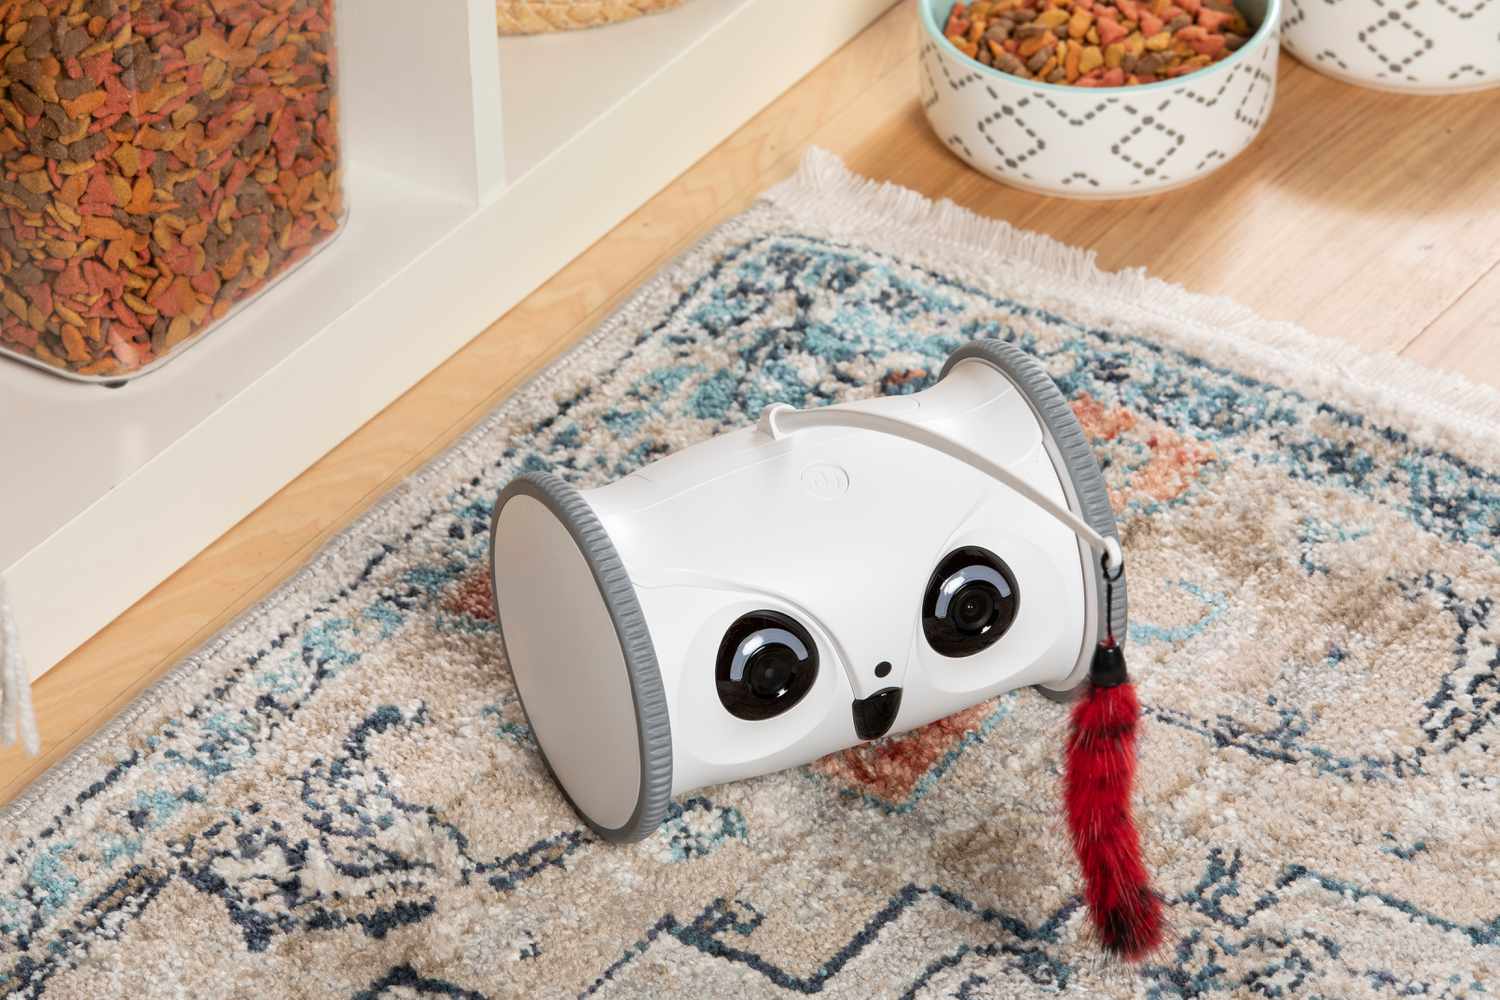 Skymee Owl Robot displayed on a carpet